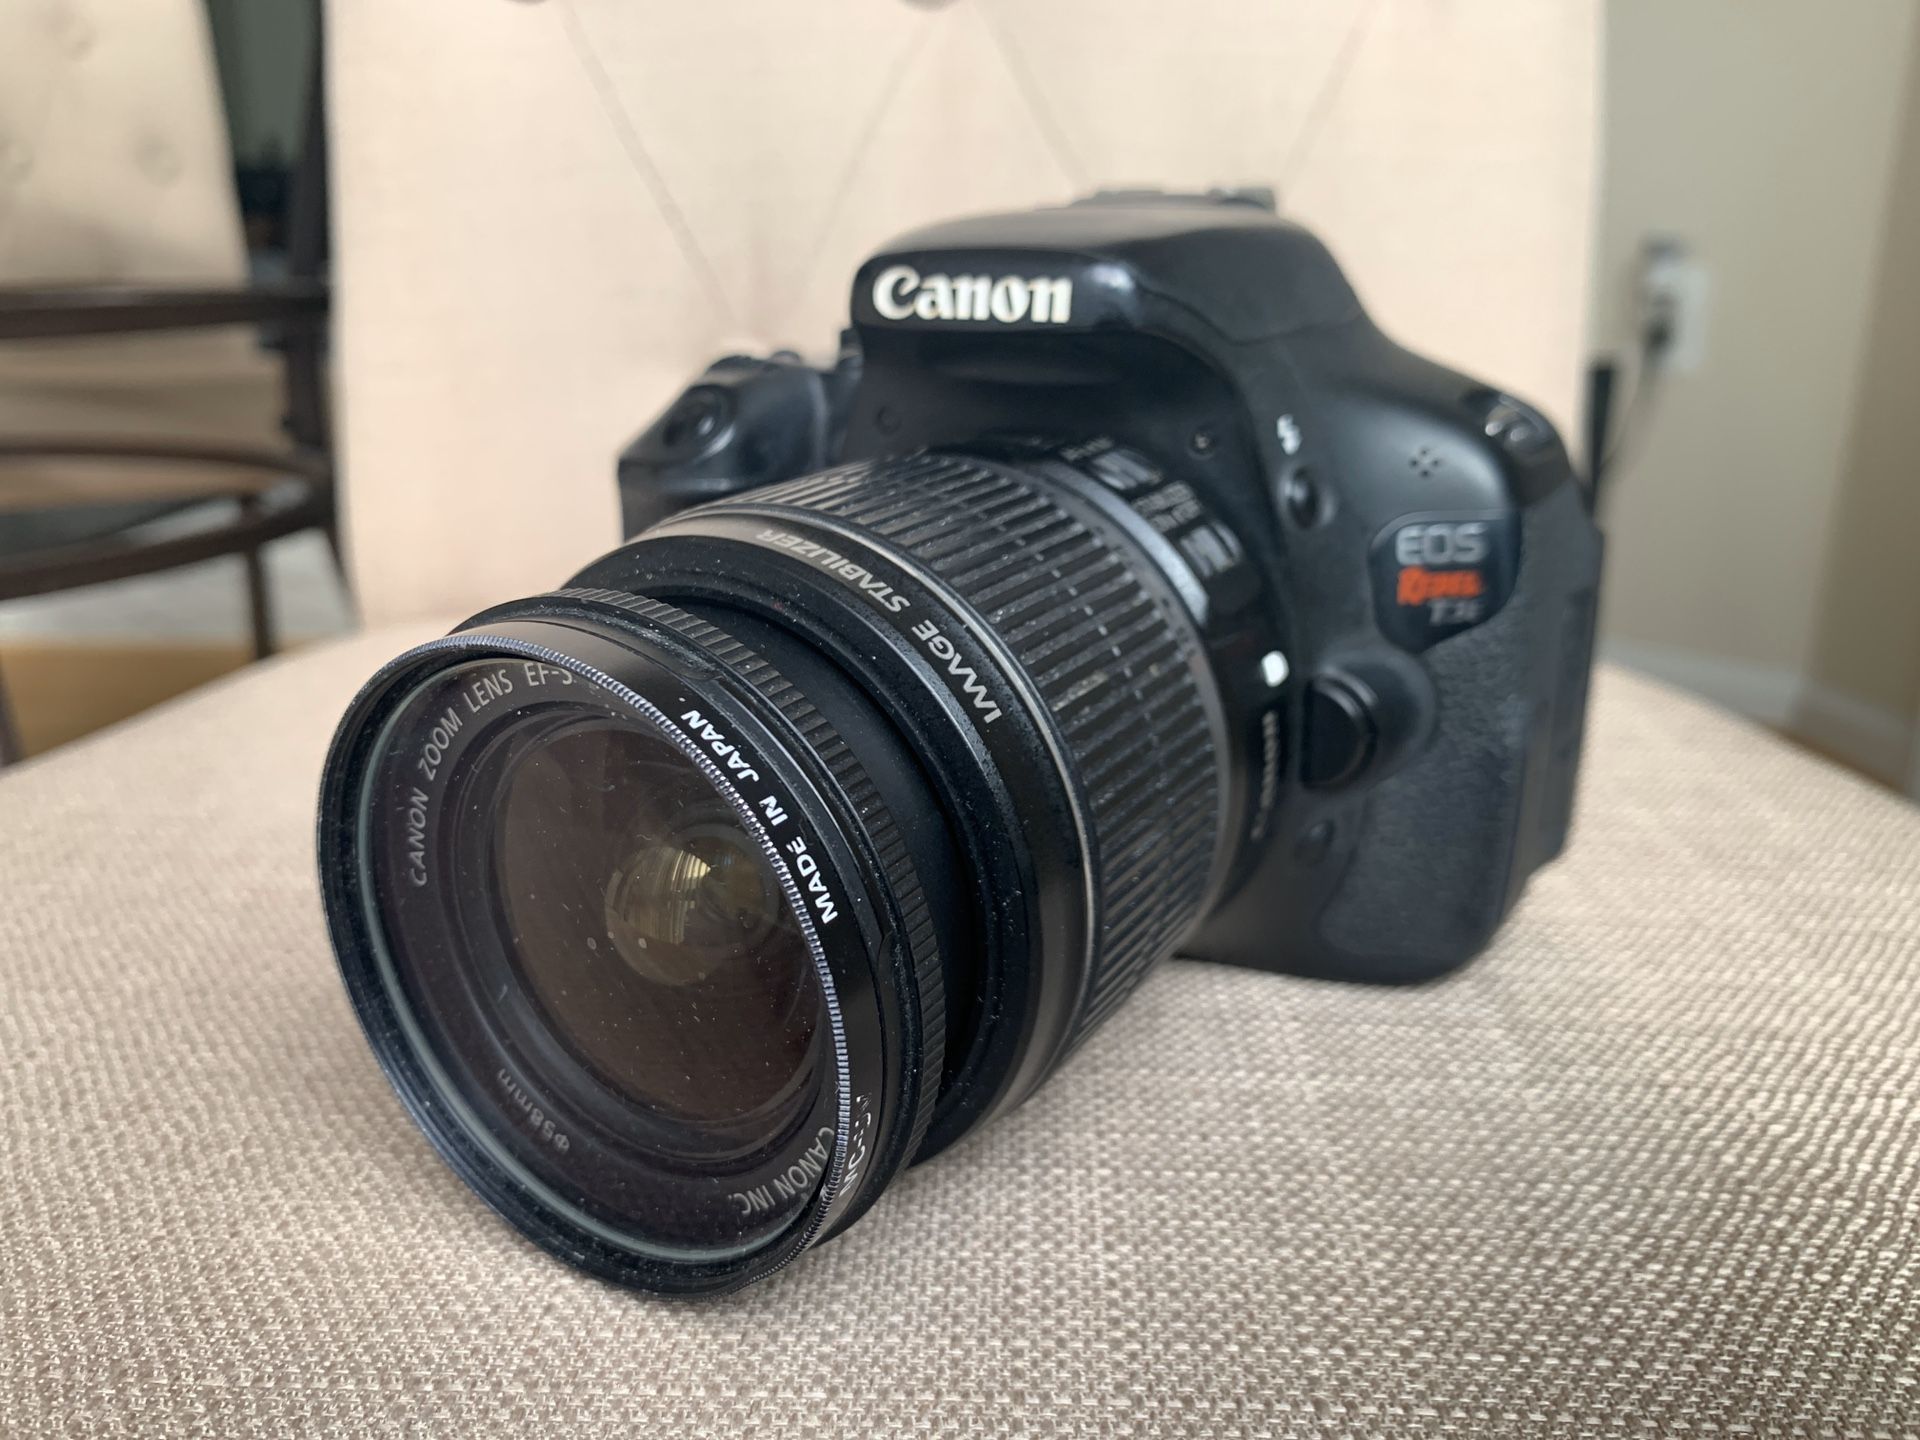 Canon T3i Digital SLR Camera — FREE 16GB Memory Card Included!